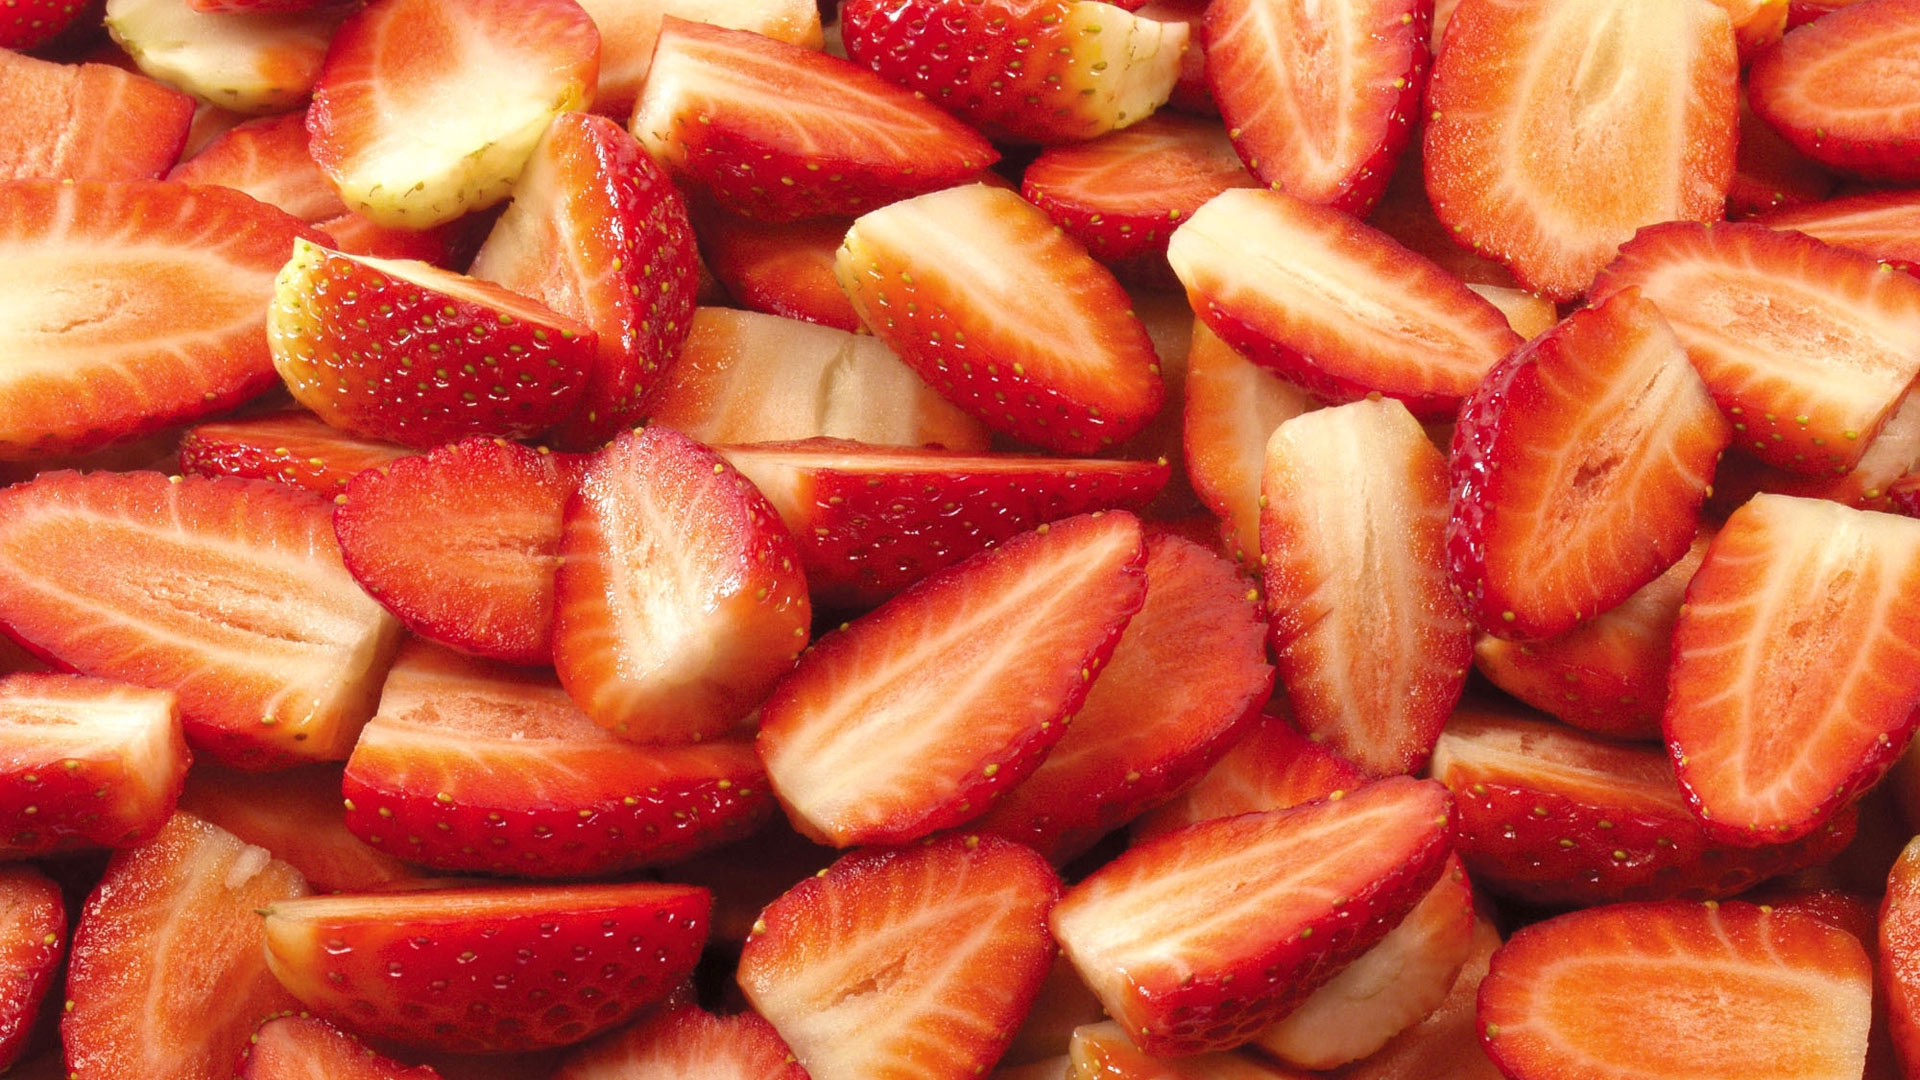 Sliced red strawberries